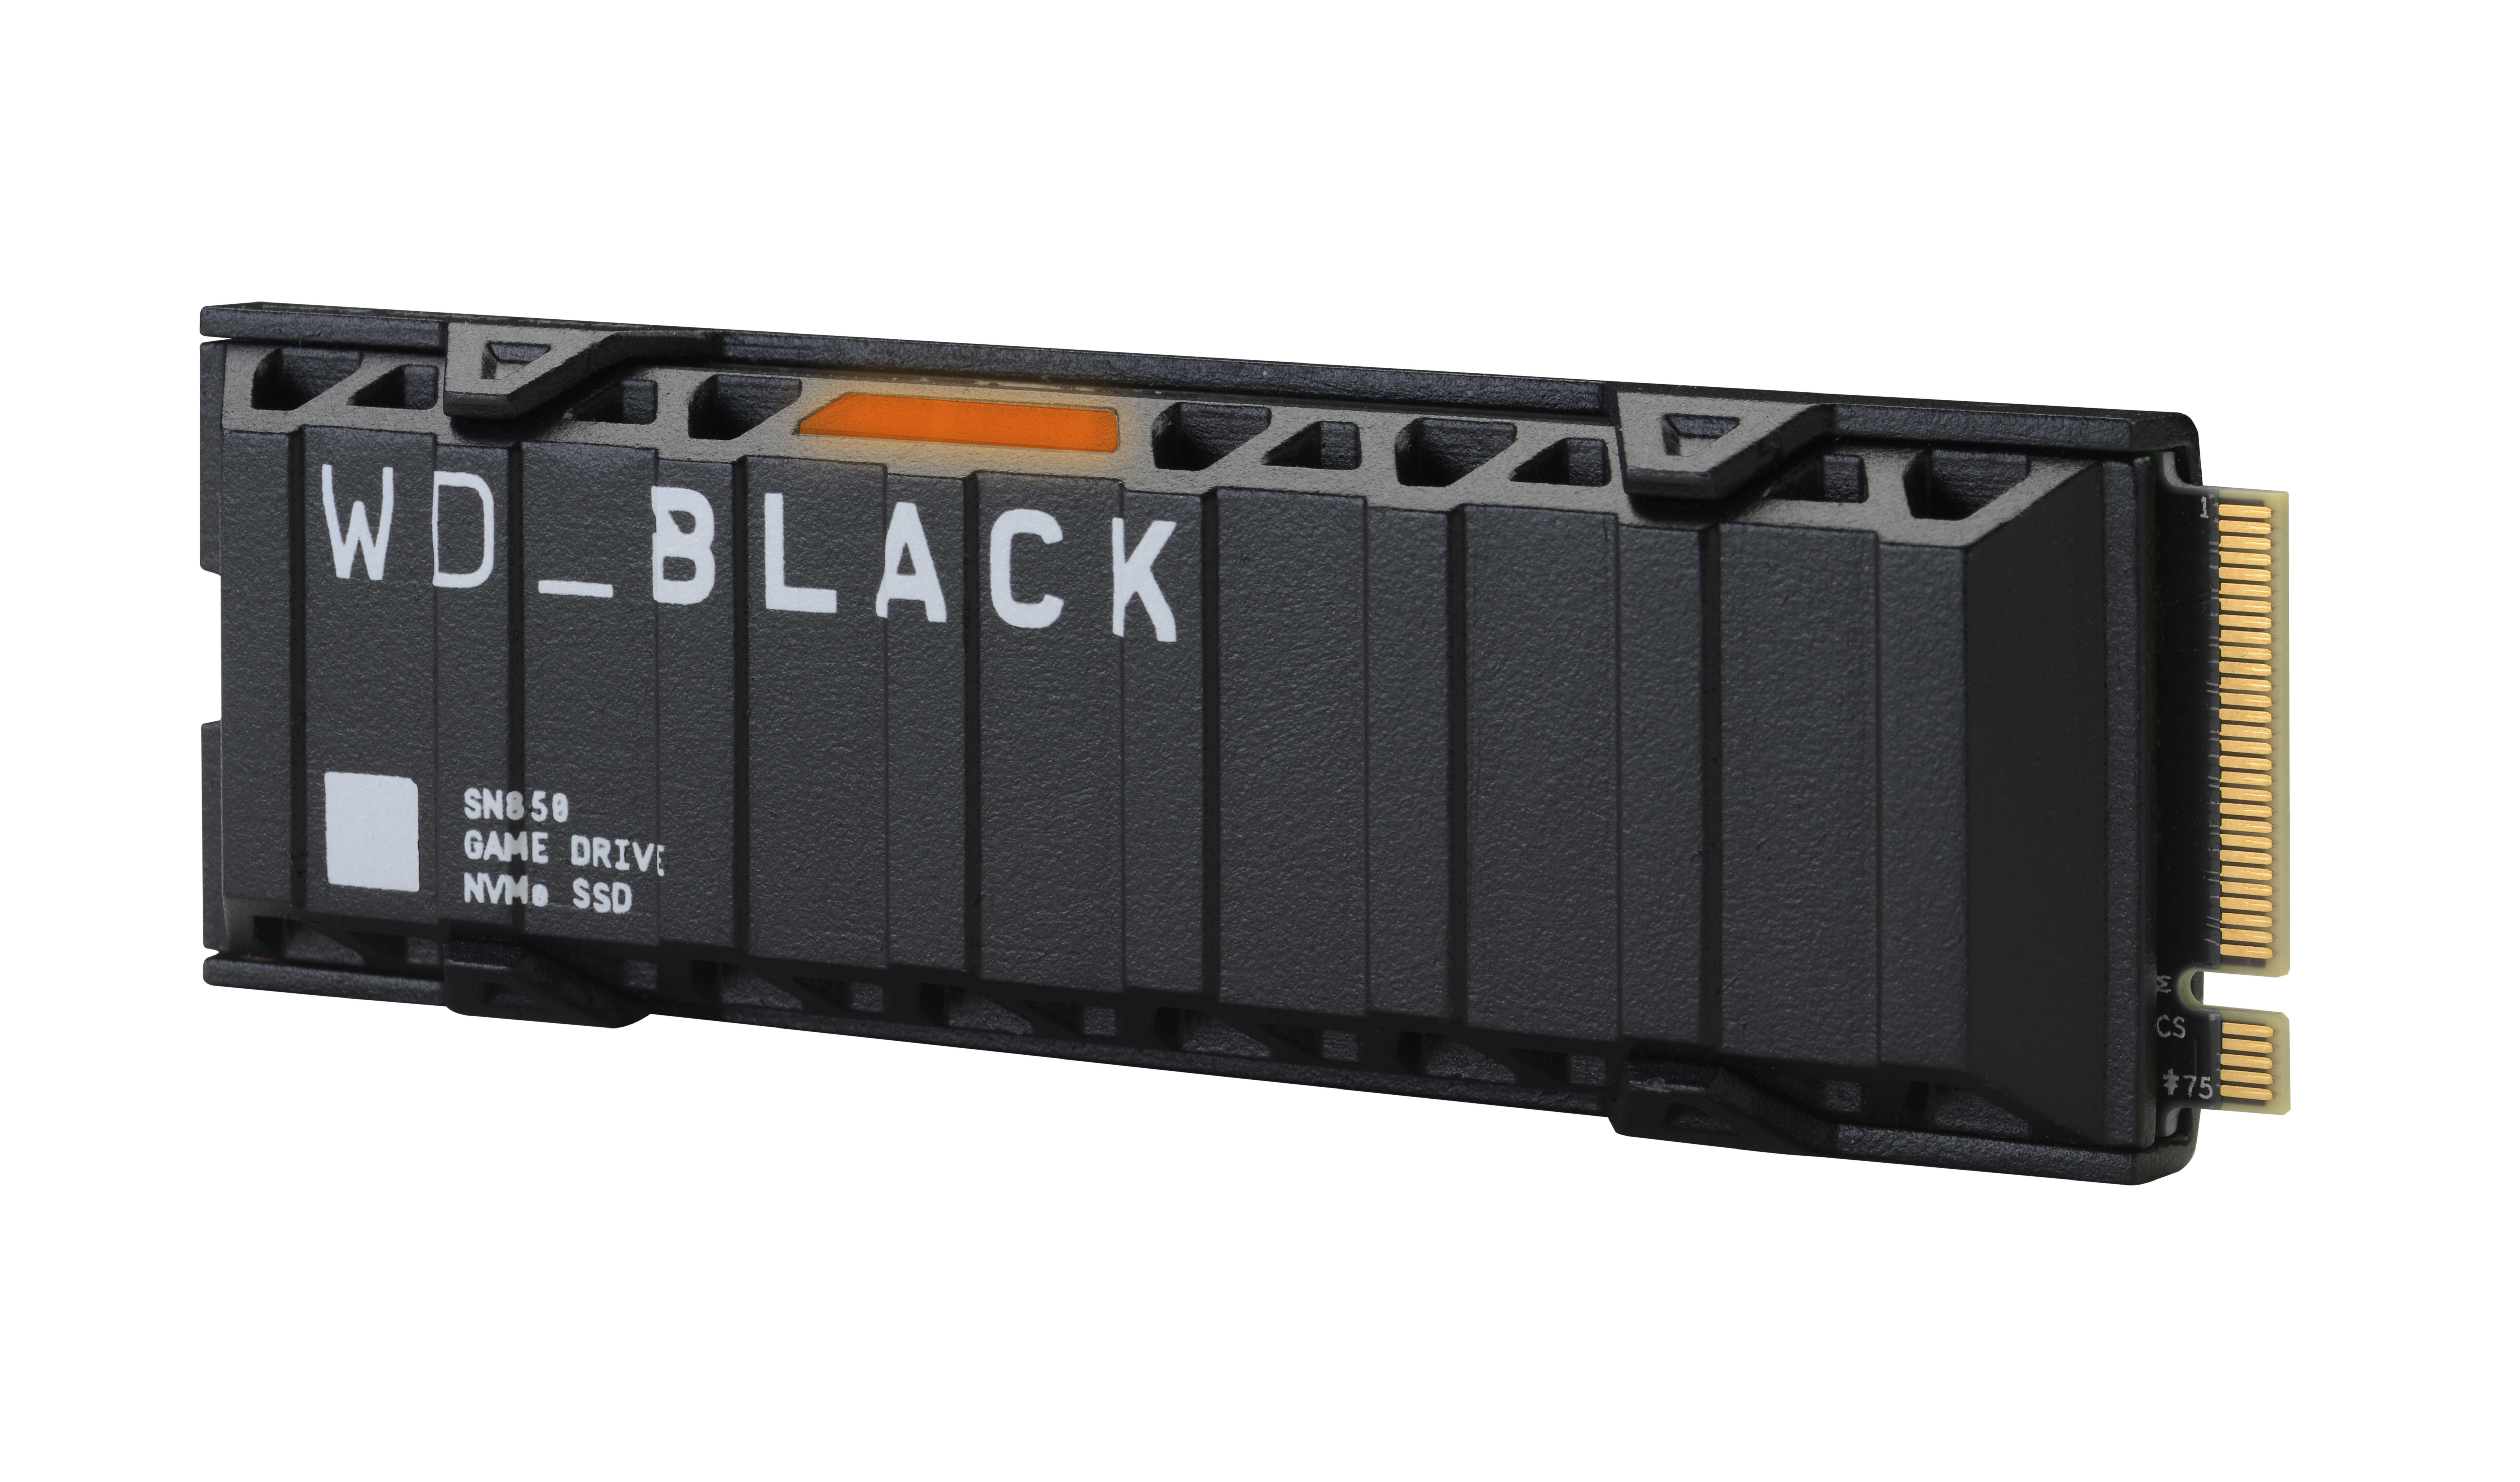 WD_BLACK SN850 mit Kühlkörper - Express, PlayStation™ Works 1 SSD, SSD intern with PCI 5*, TB Gaming